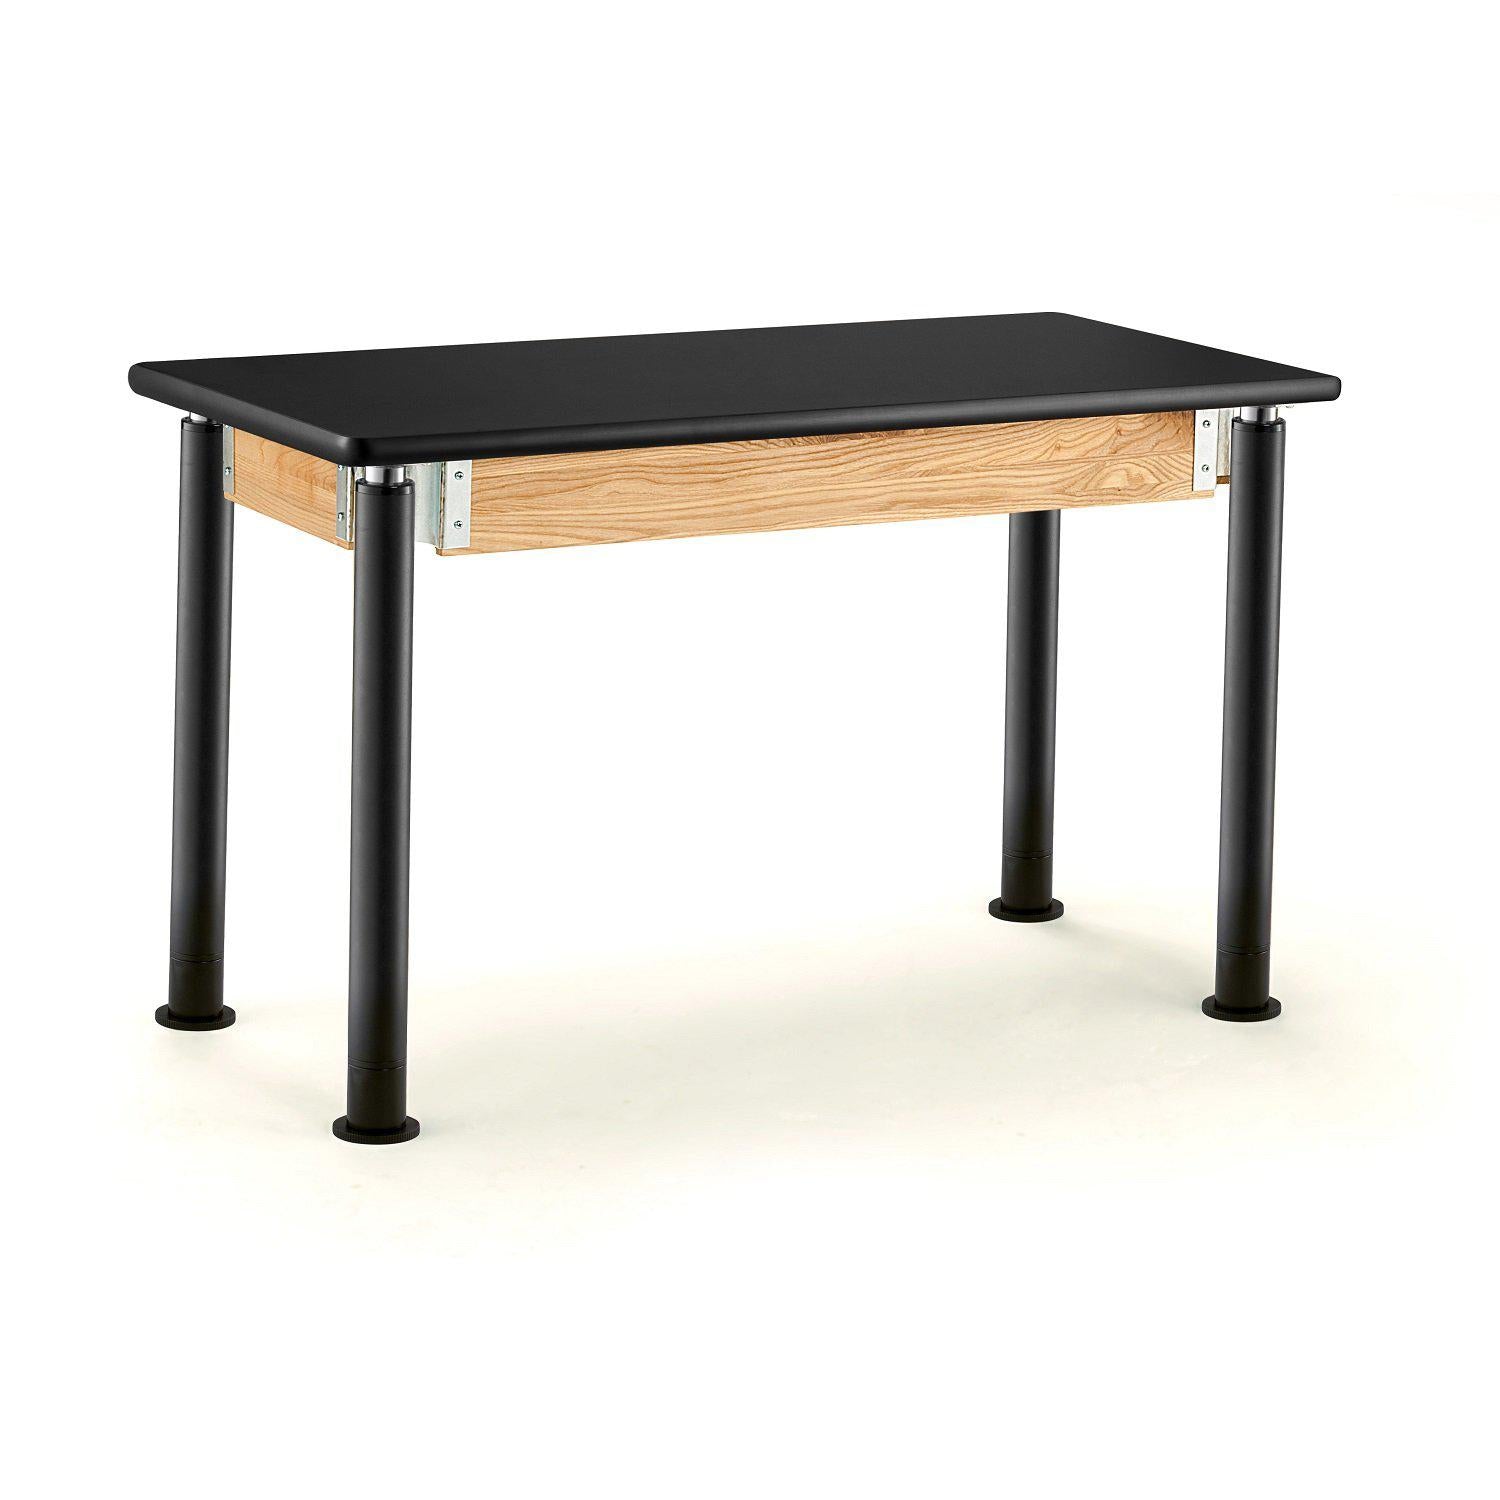 Signature Series Adjustable Height Science Lab Table, Textured Black Legs, 24"x60", Black High Pressure Laminate Top